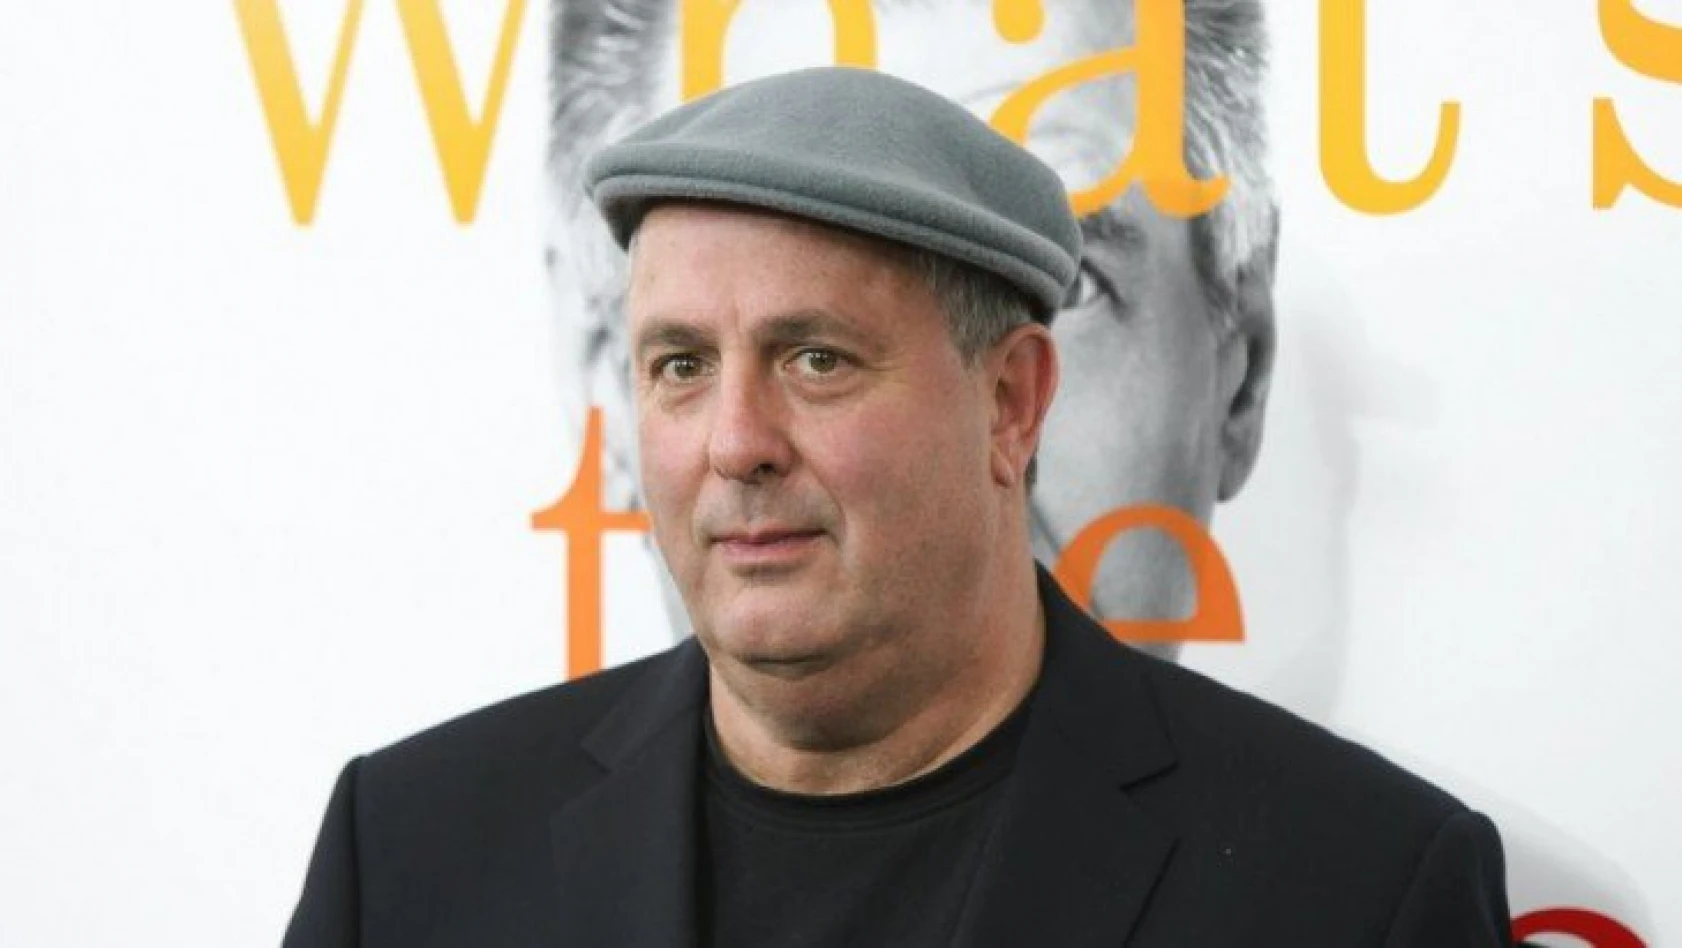 Yönetmen Roger Michell yaşamını yitirdi